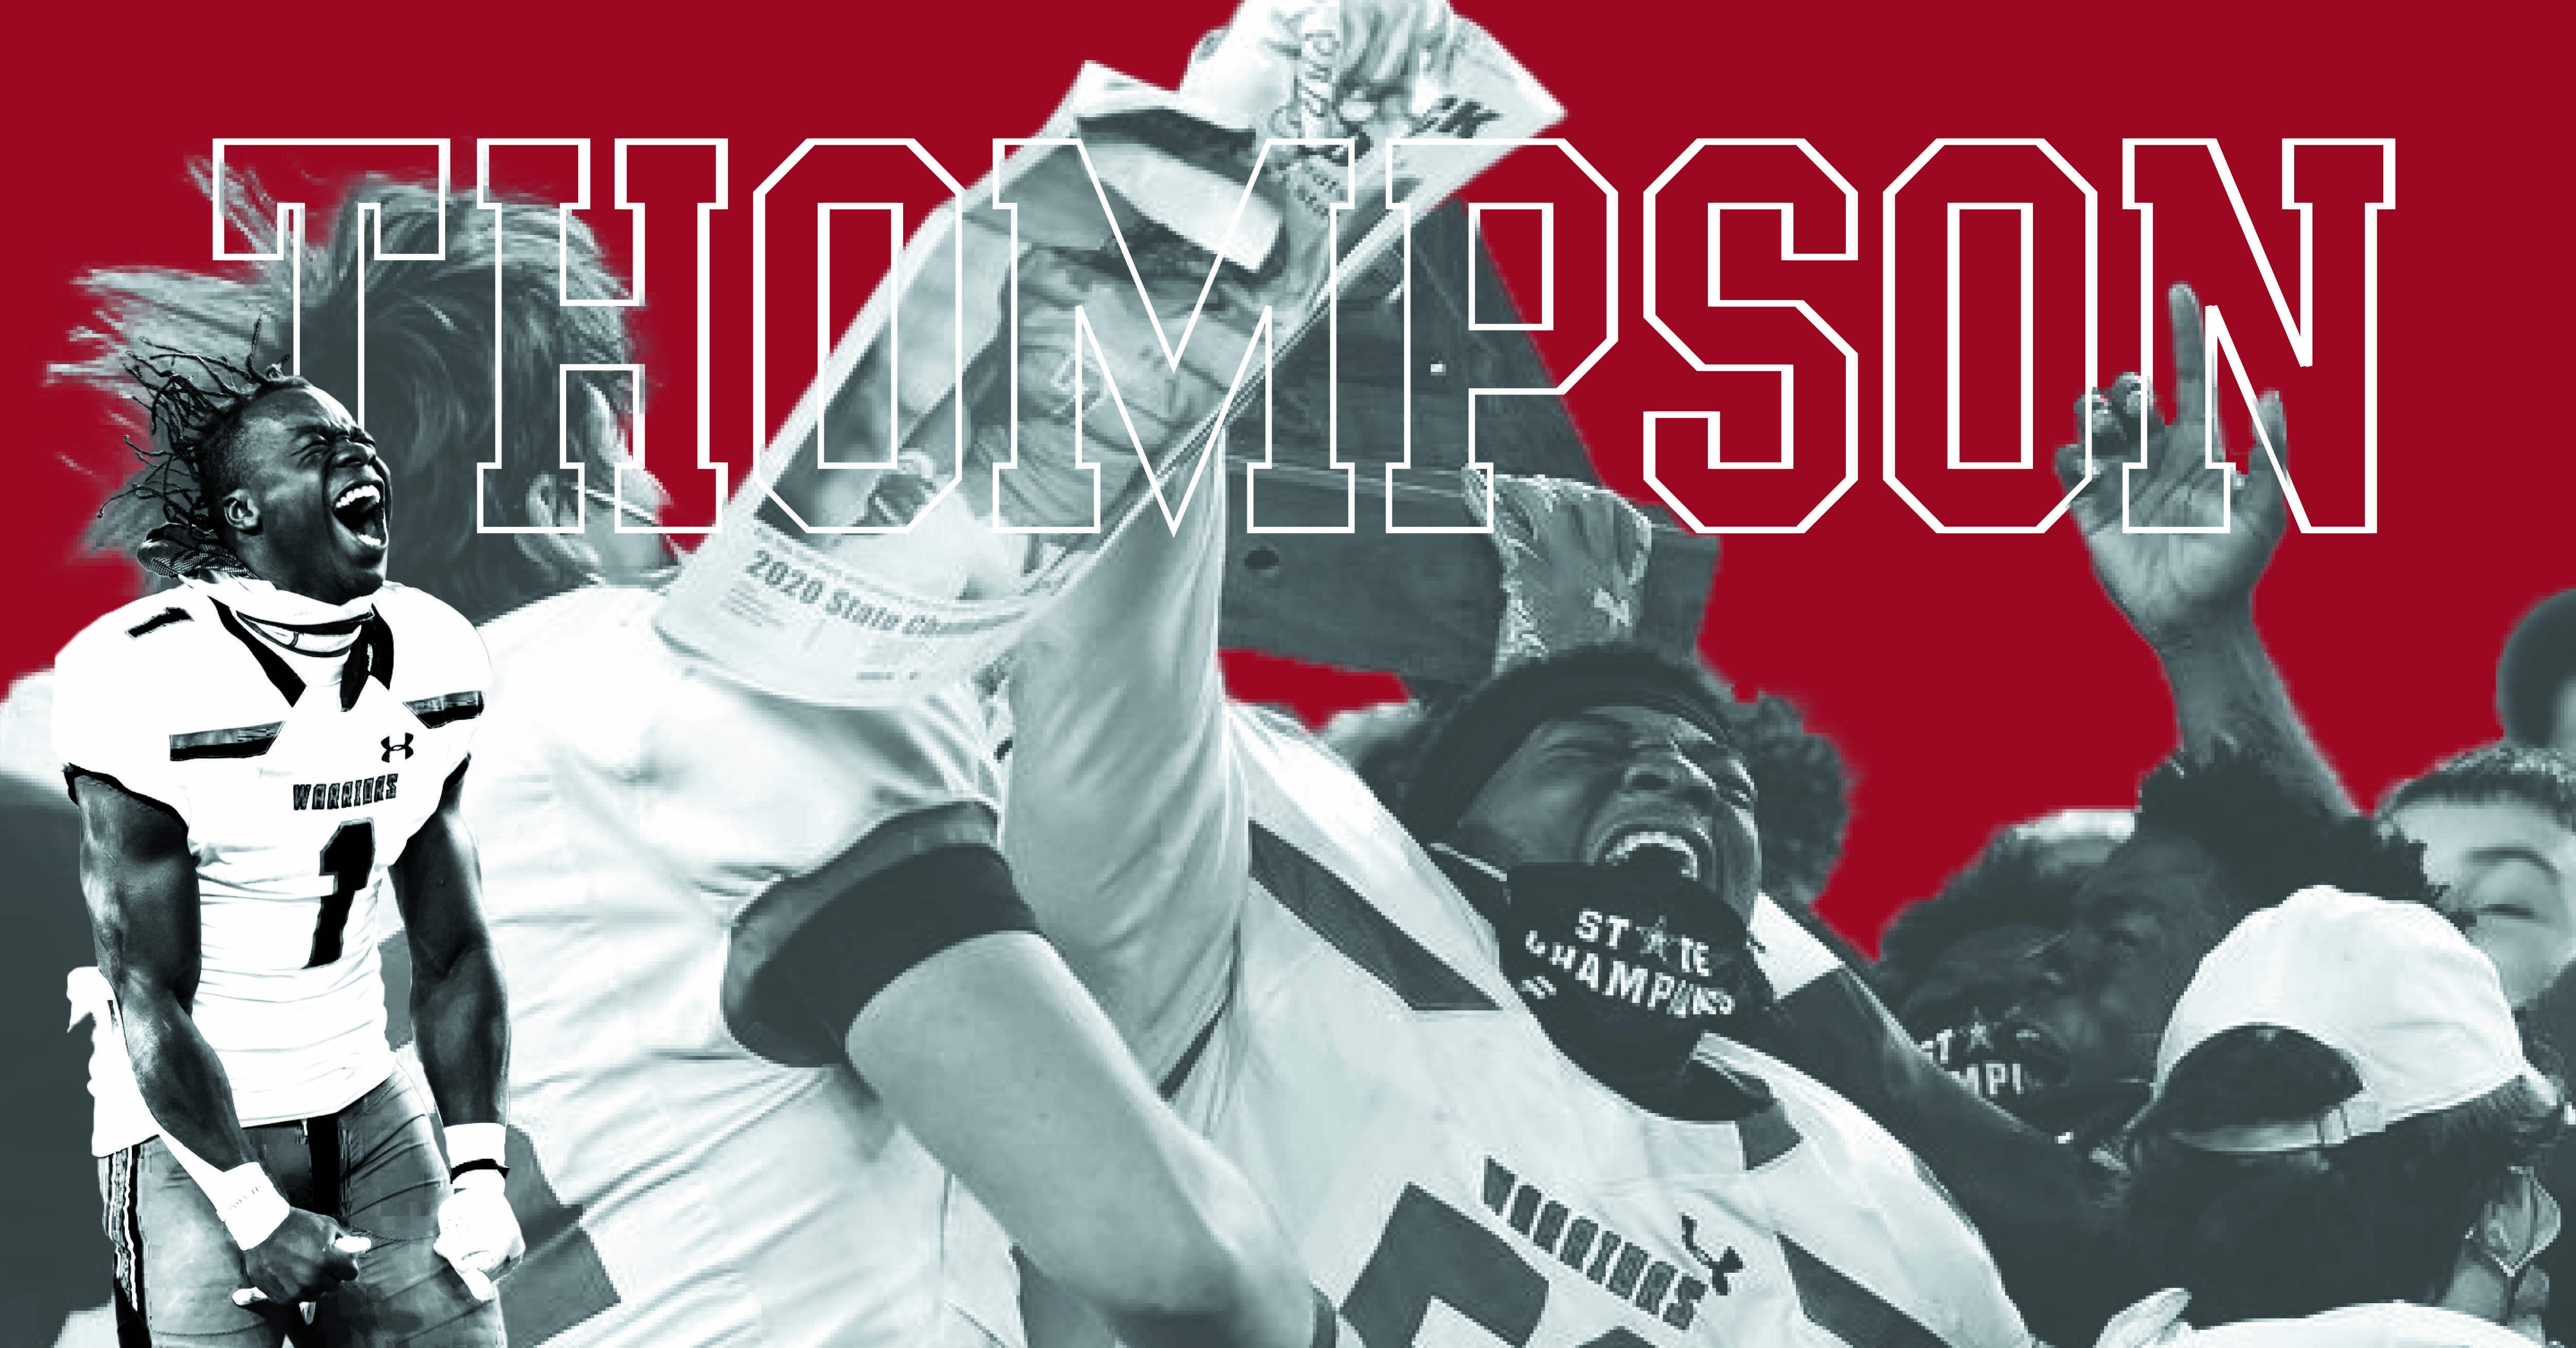 Thompson Football Team “Most Followed” on MaxPreps - ITG Next